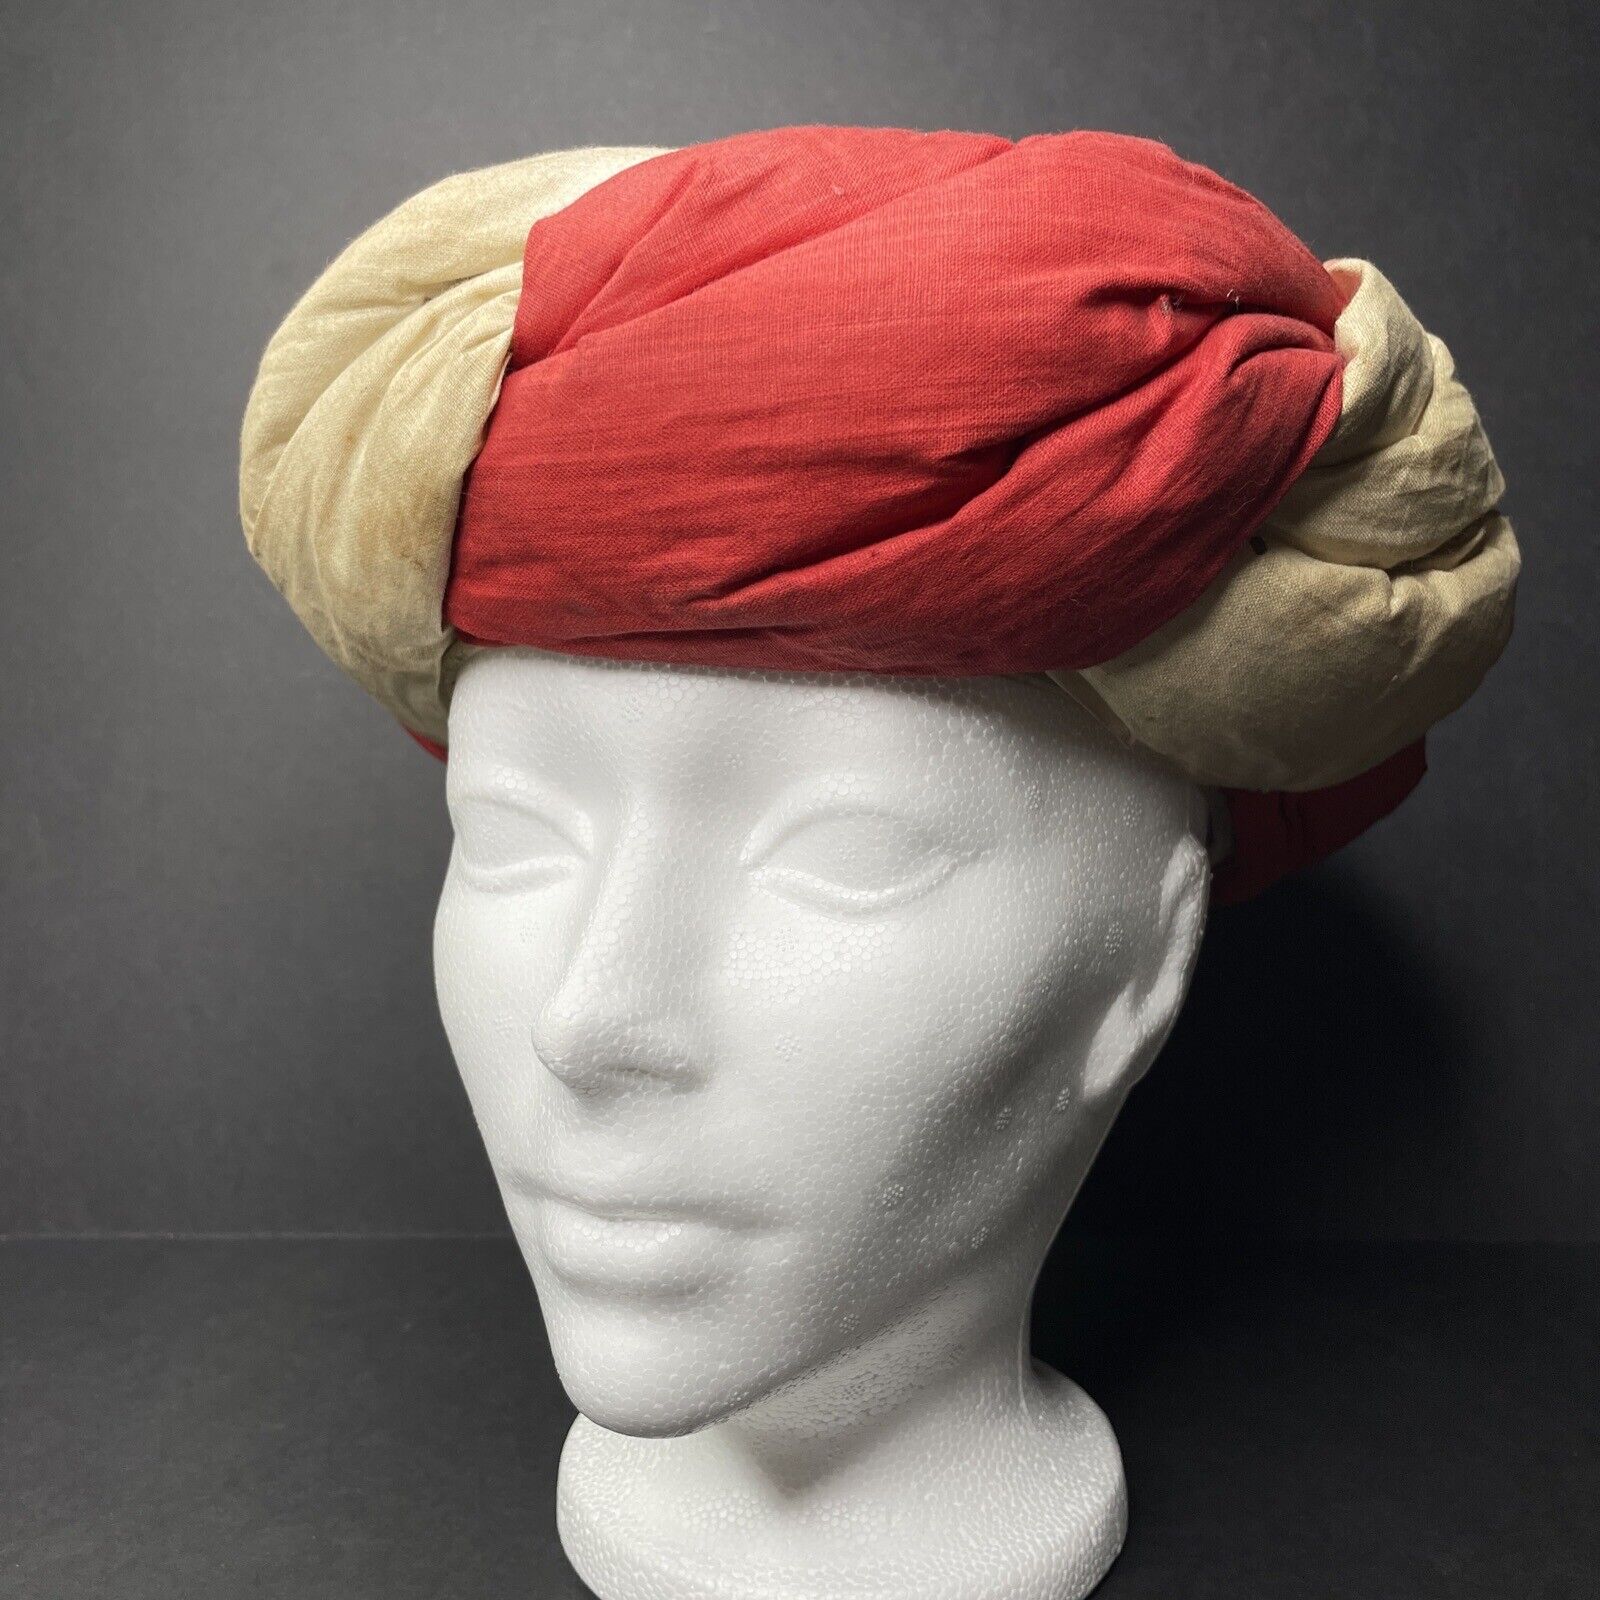 Antique 1880s High Priest Canvas Turban Hat Cap IOOF Odd Fellows Order RARE